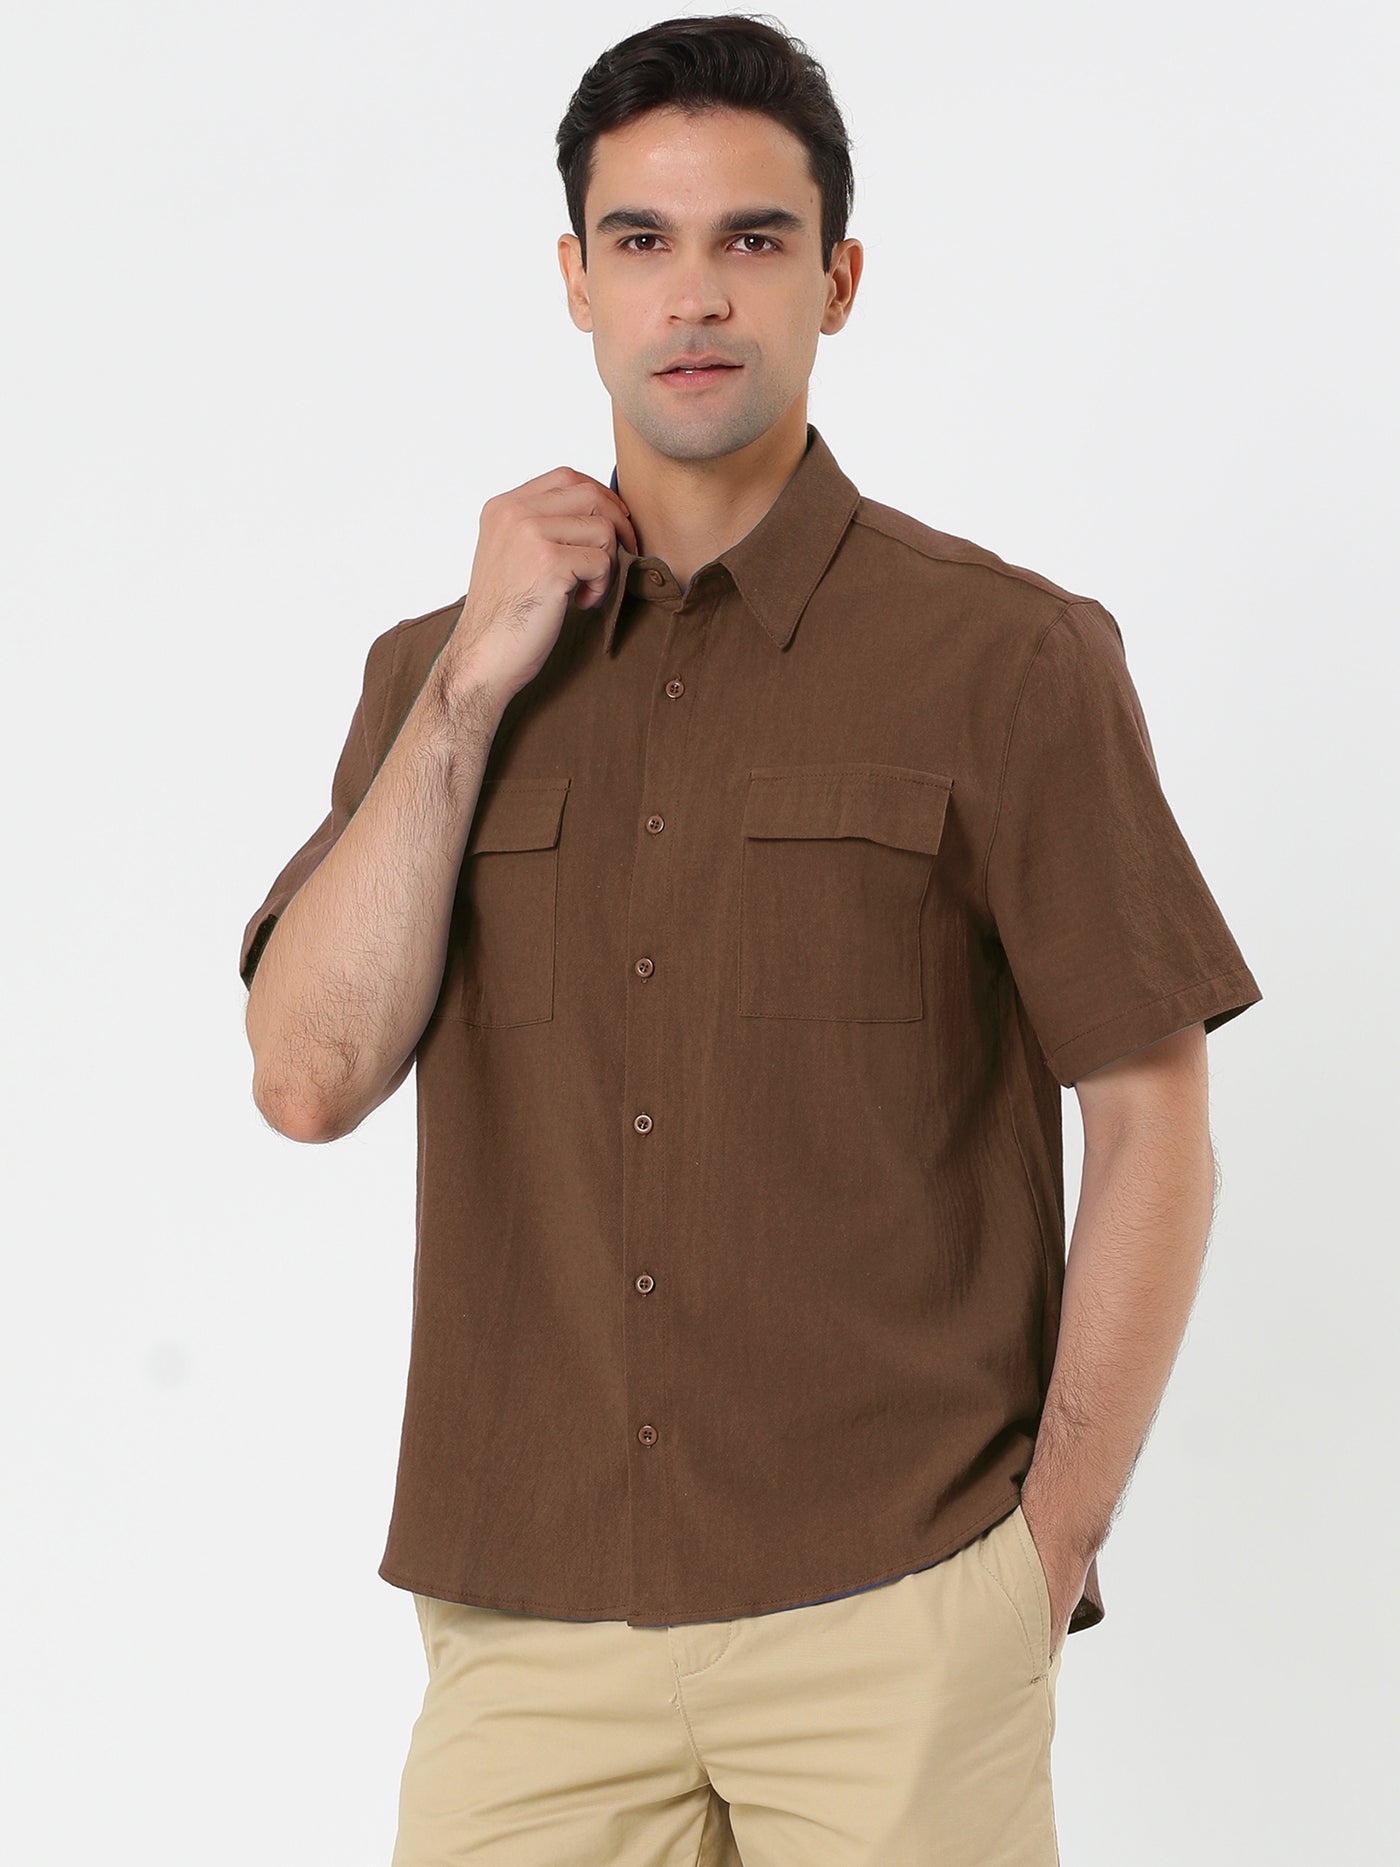 Bublédon Summer Point collar Short Sleeve Button Solid Shirts